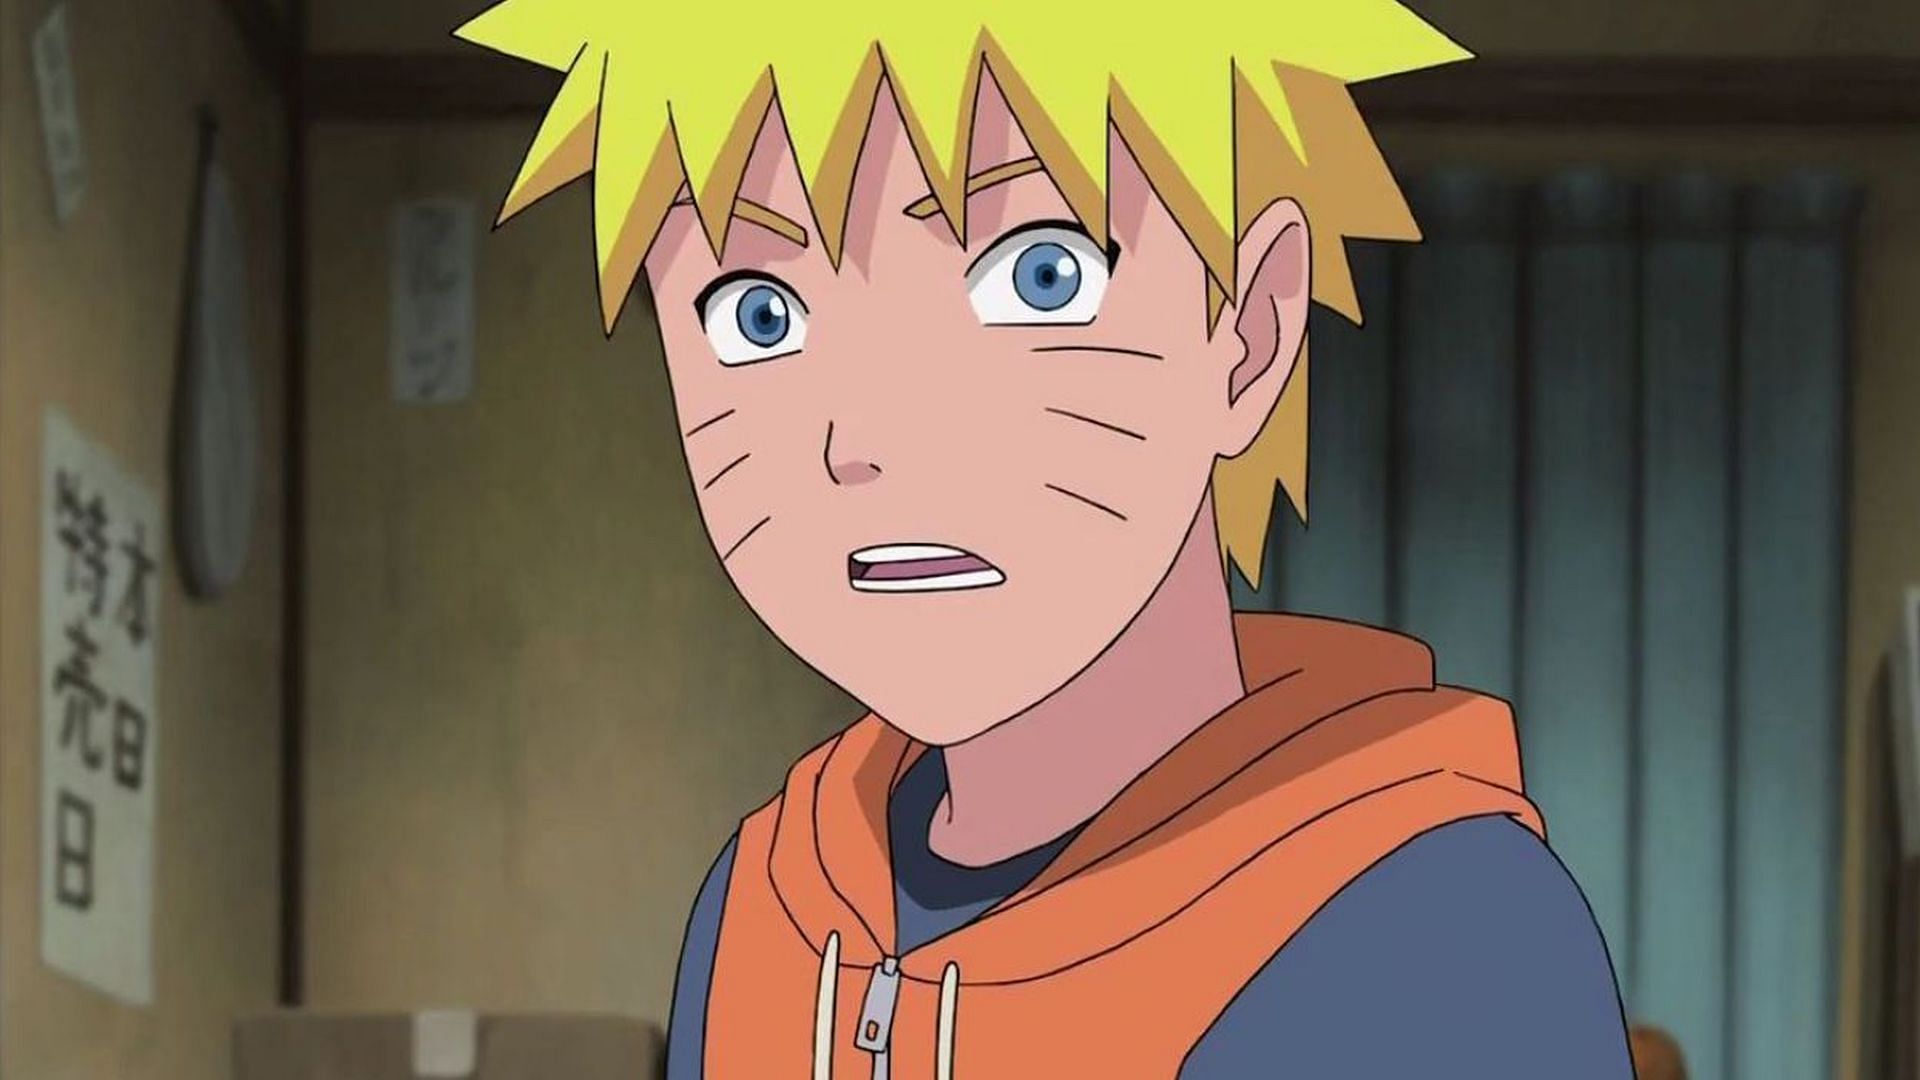 Naruto as seen in the show (Image via Studio Pierrot)